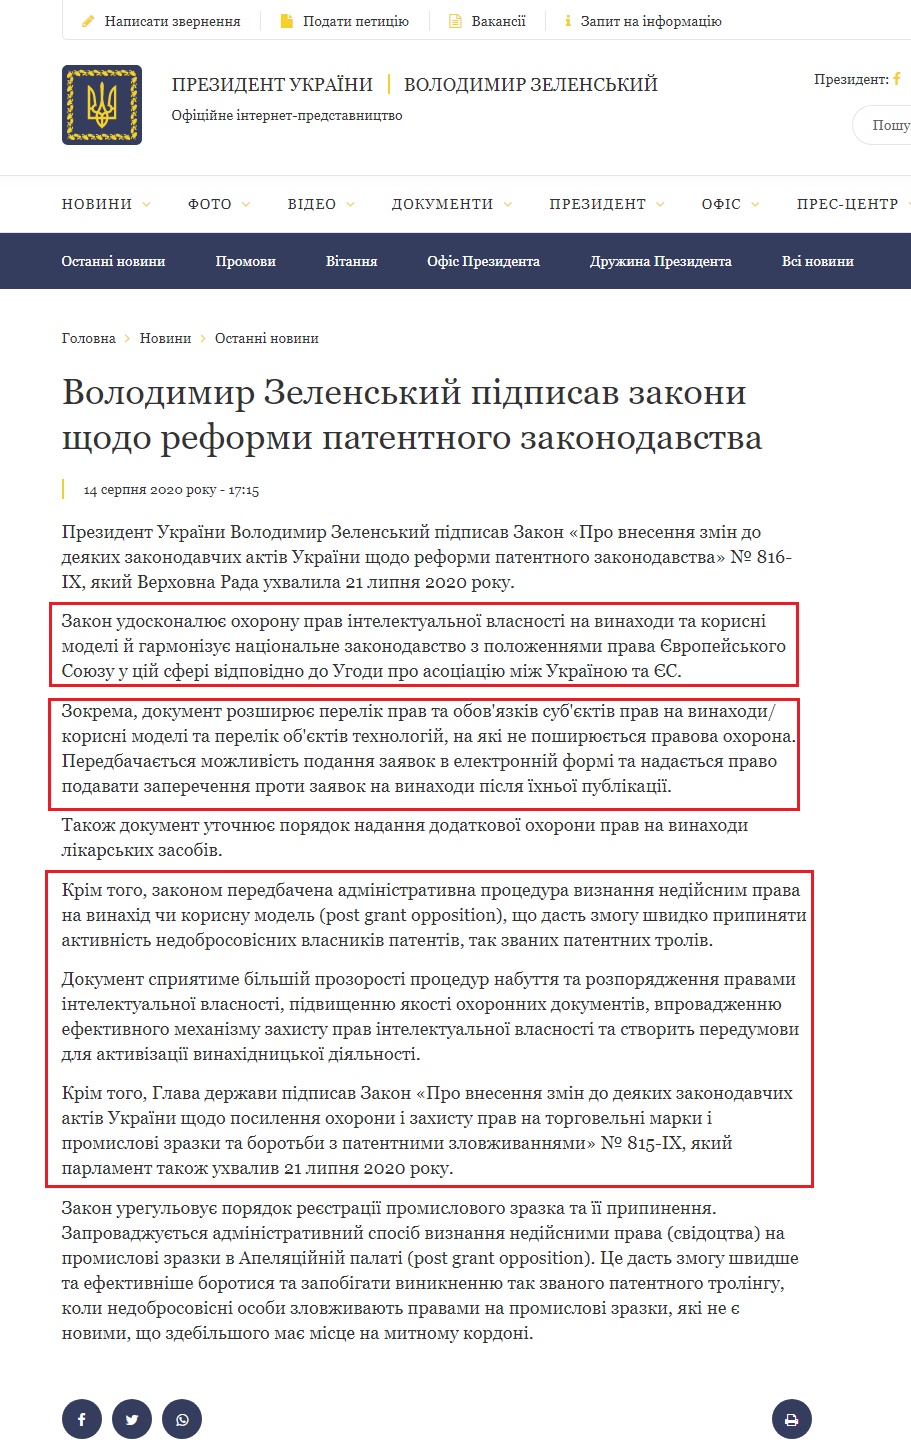 https://www.president.gov.ua/news/volodimir-zelenskij-pidpisav-zakoni-shodo-reformi-patentnogo-62741